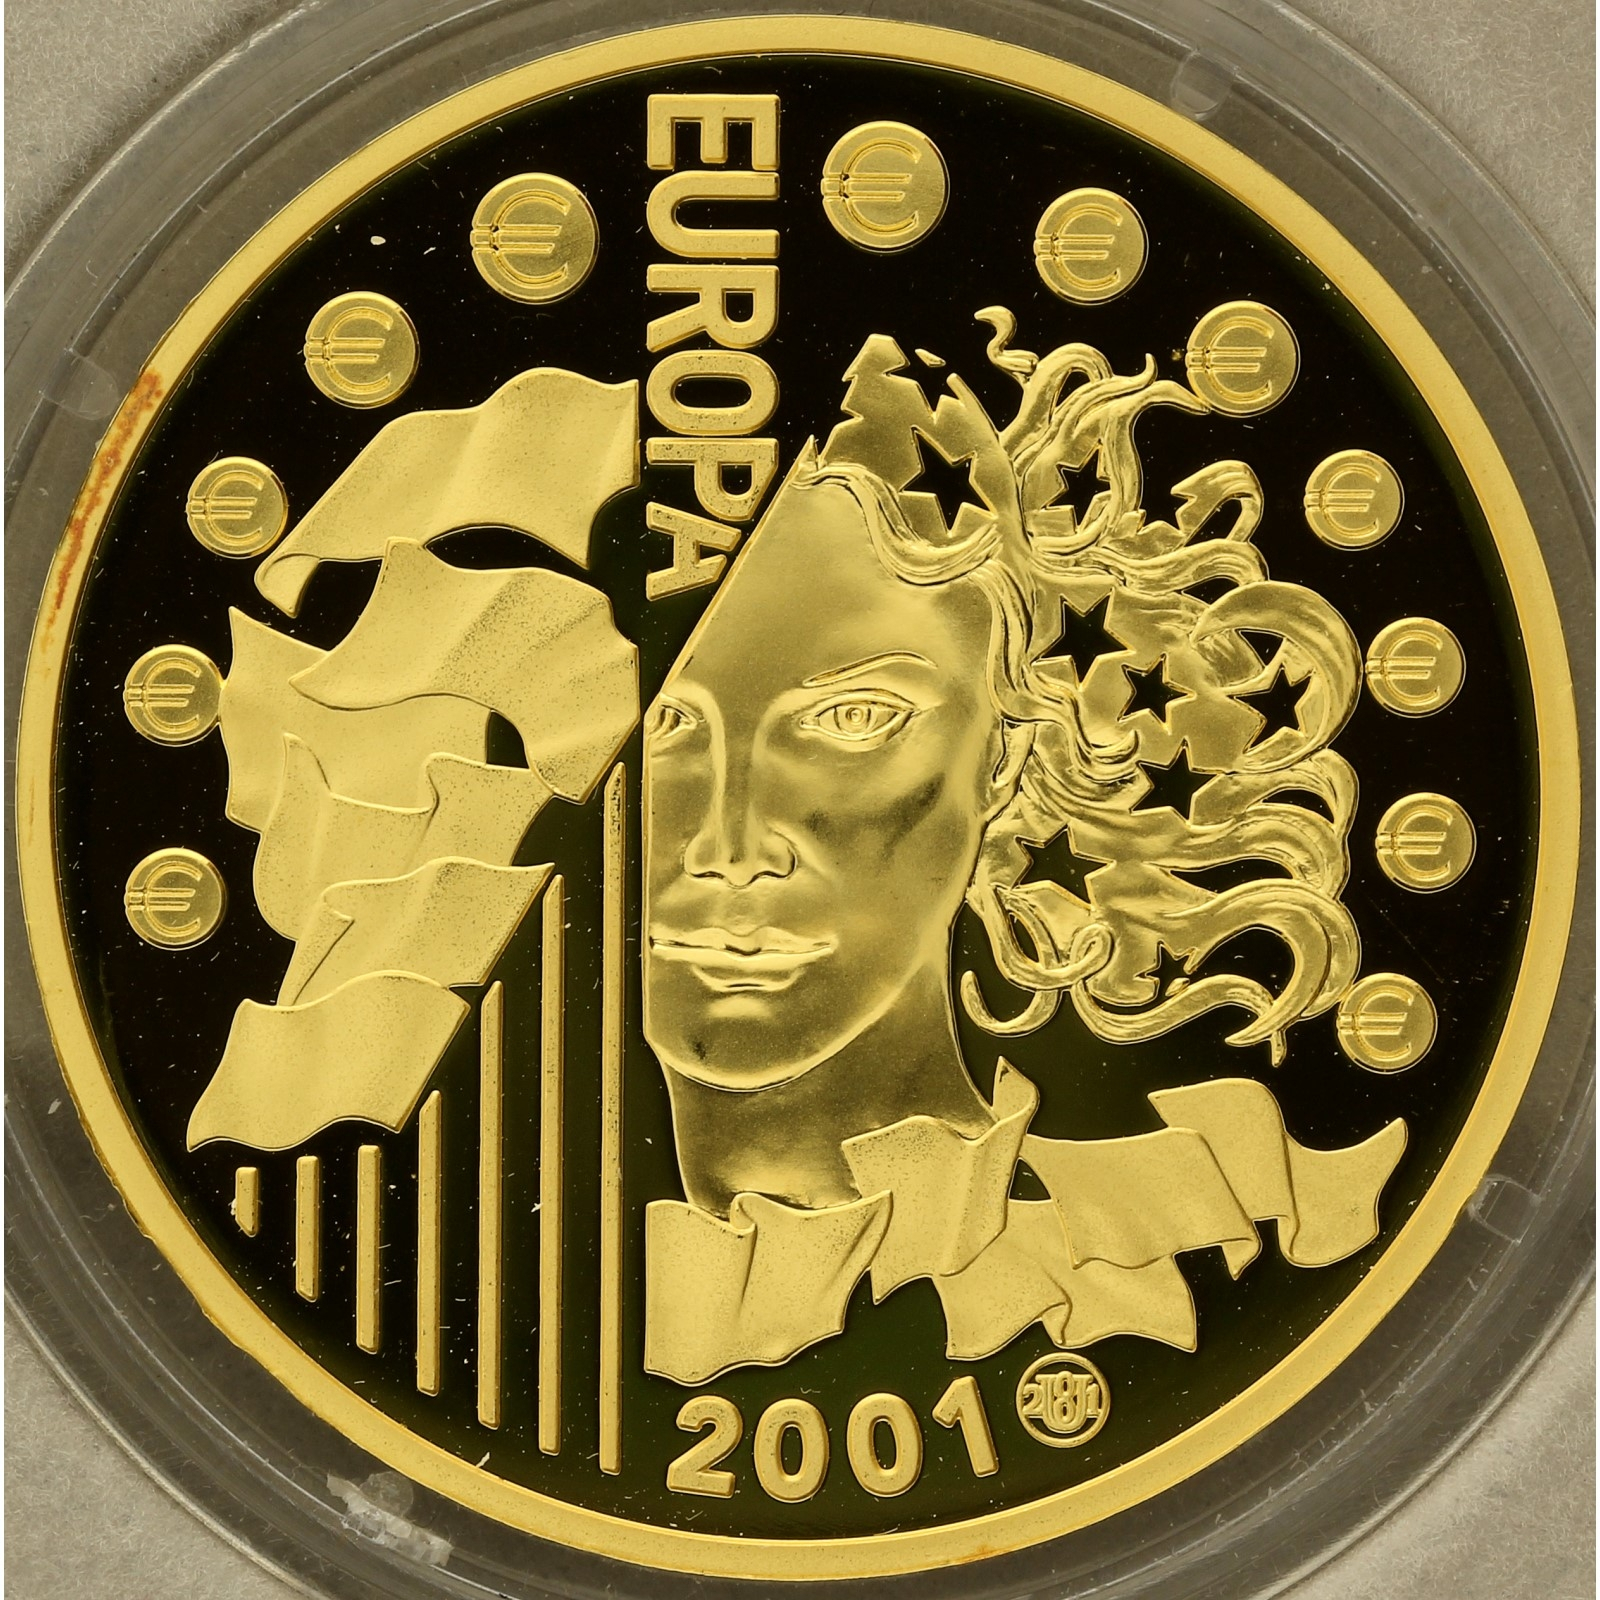 France - 655.957 Francs - 2001 - Euro - 1oz 